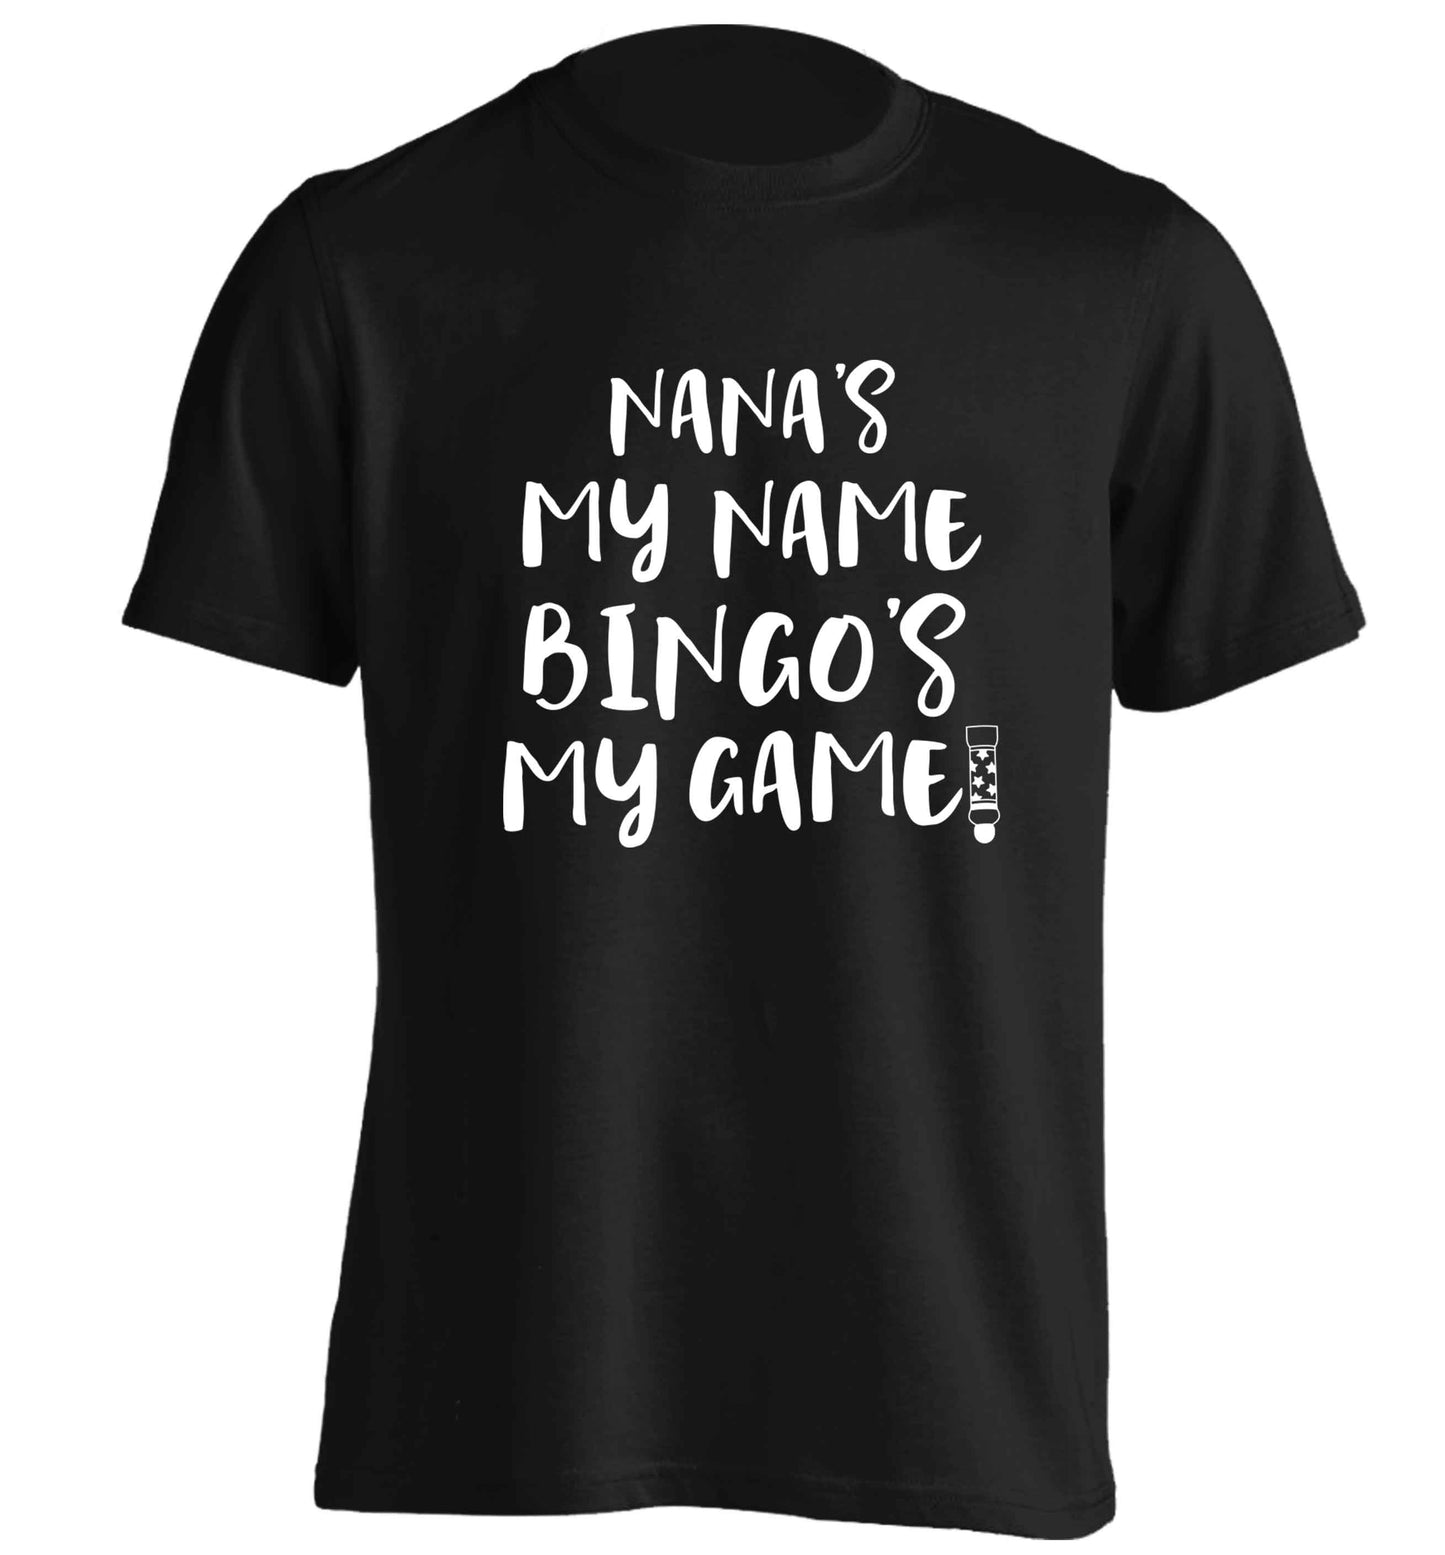 Nana's my name bingo's my game! adults unisex black Tshirt 2XL